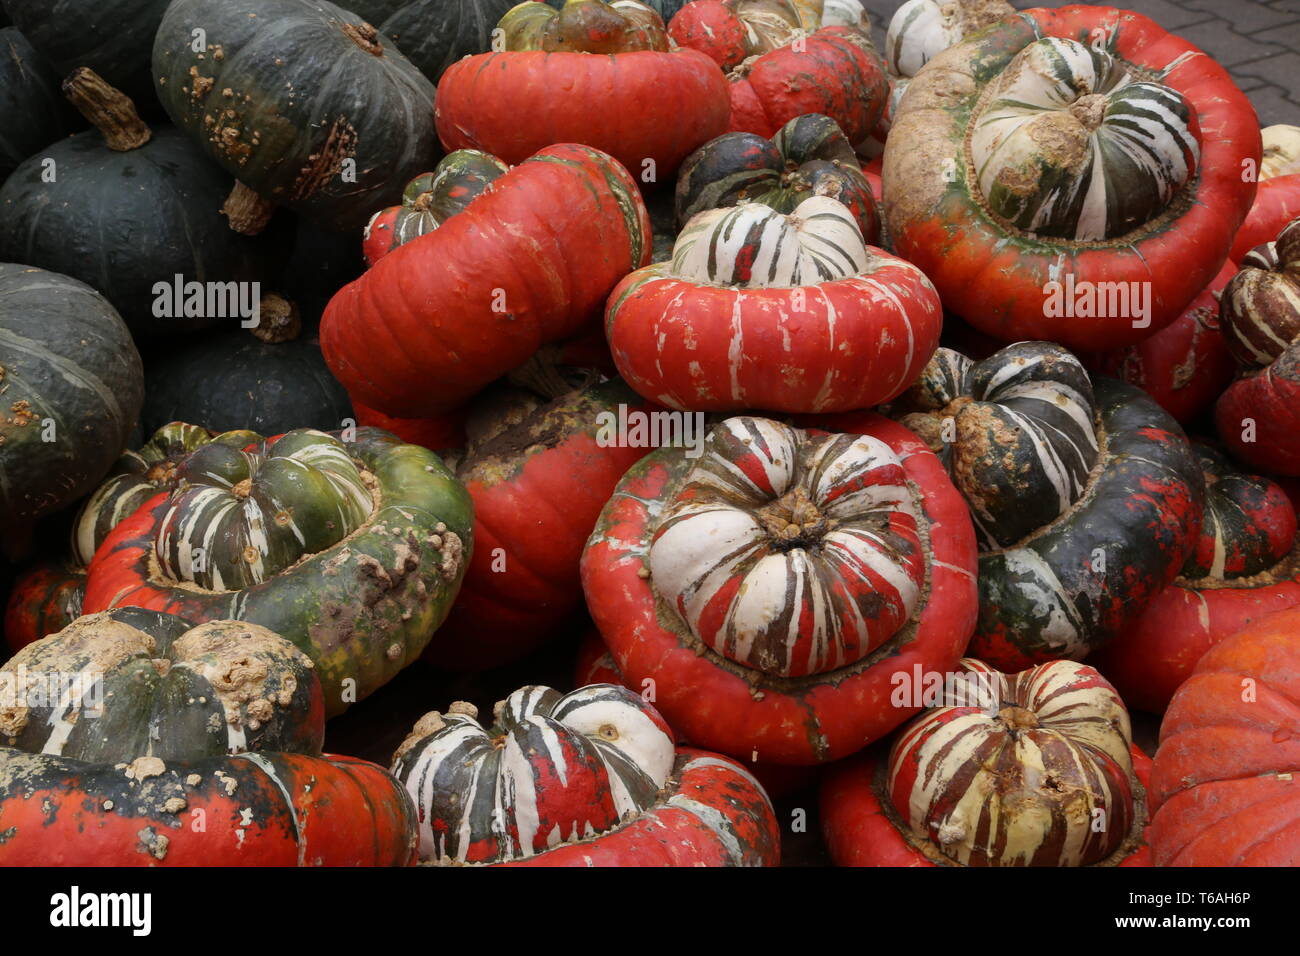 Decorative gourd or ornamental pumpkin Stock Photo